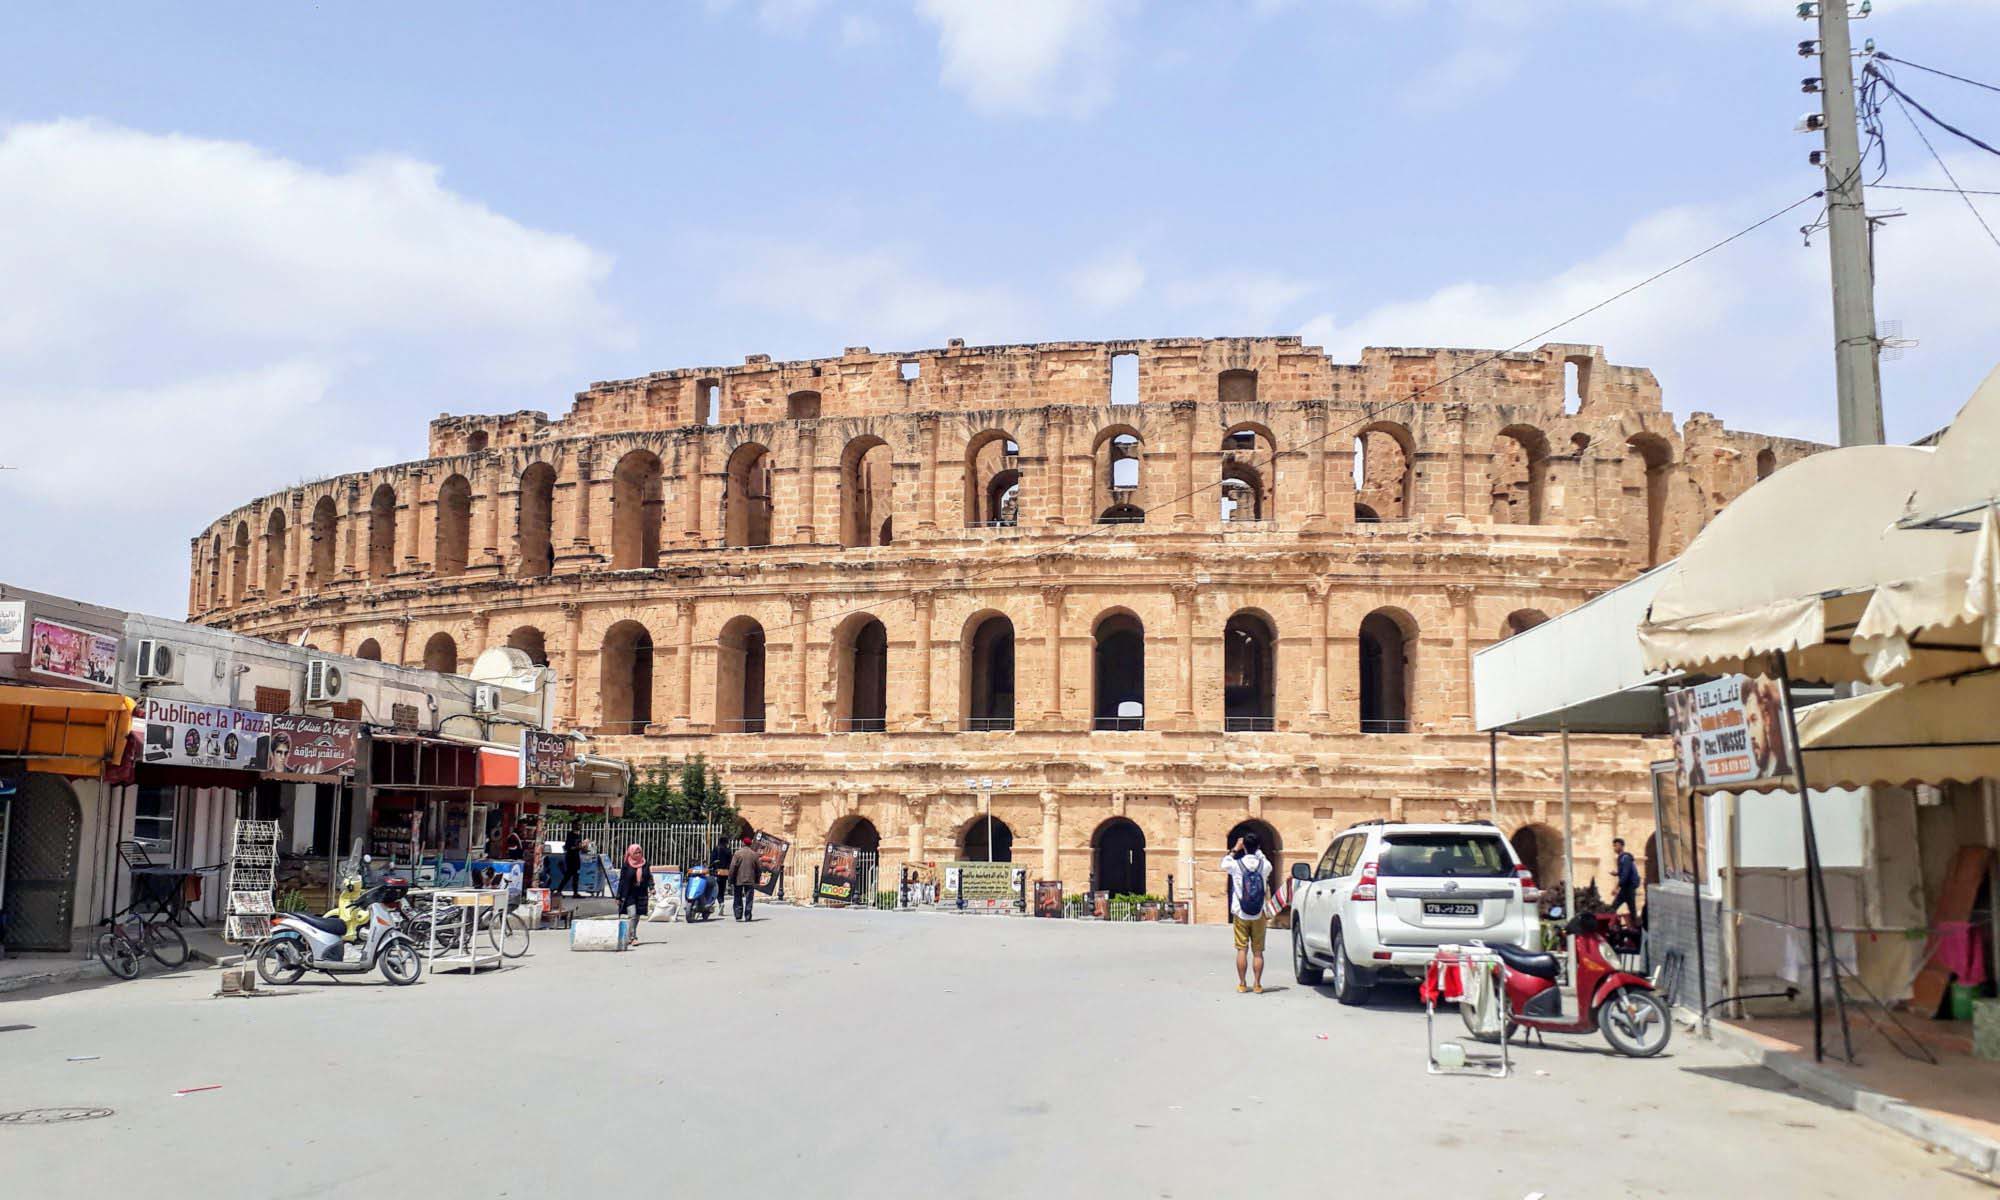 El Djem: Third Largest Amphitheater of the Roman Empire